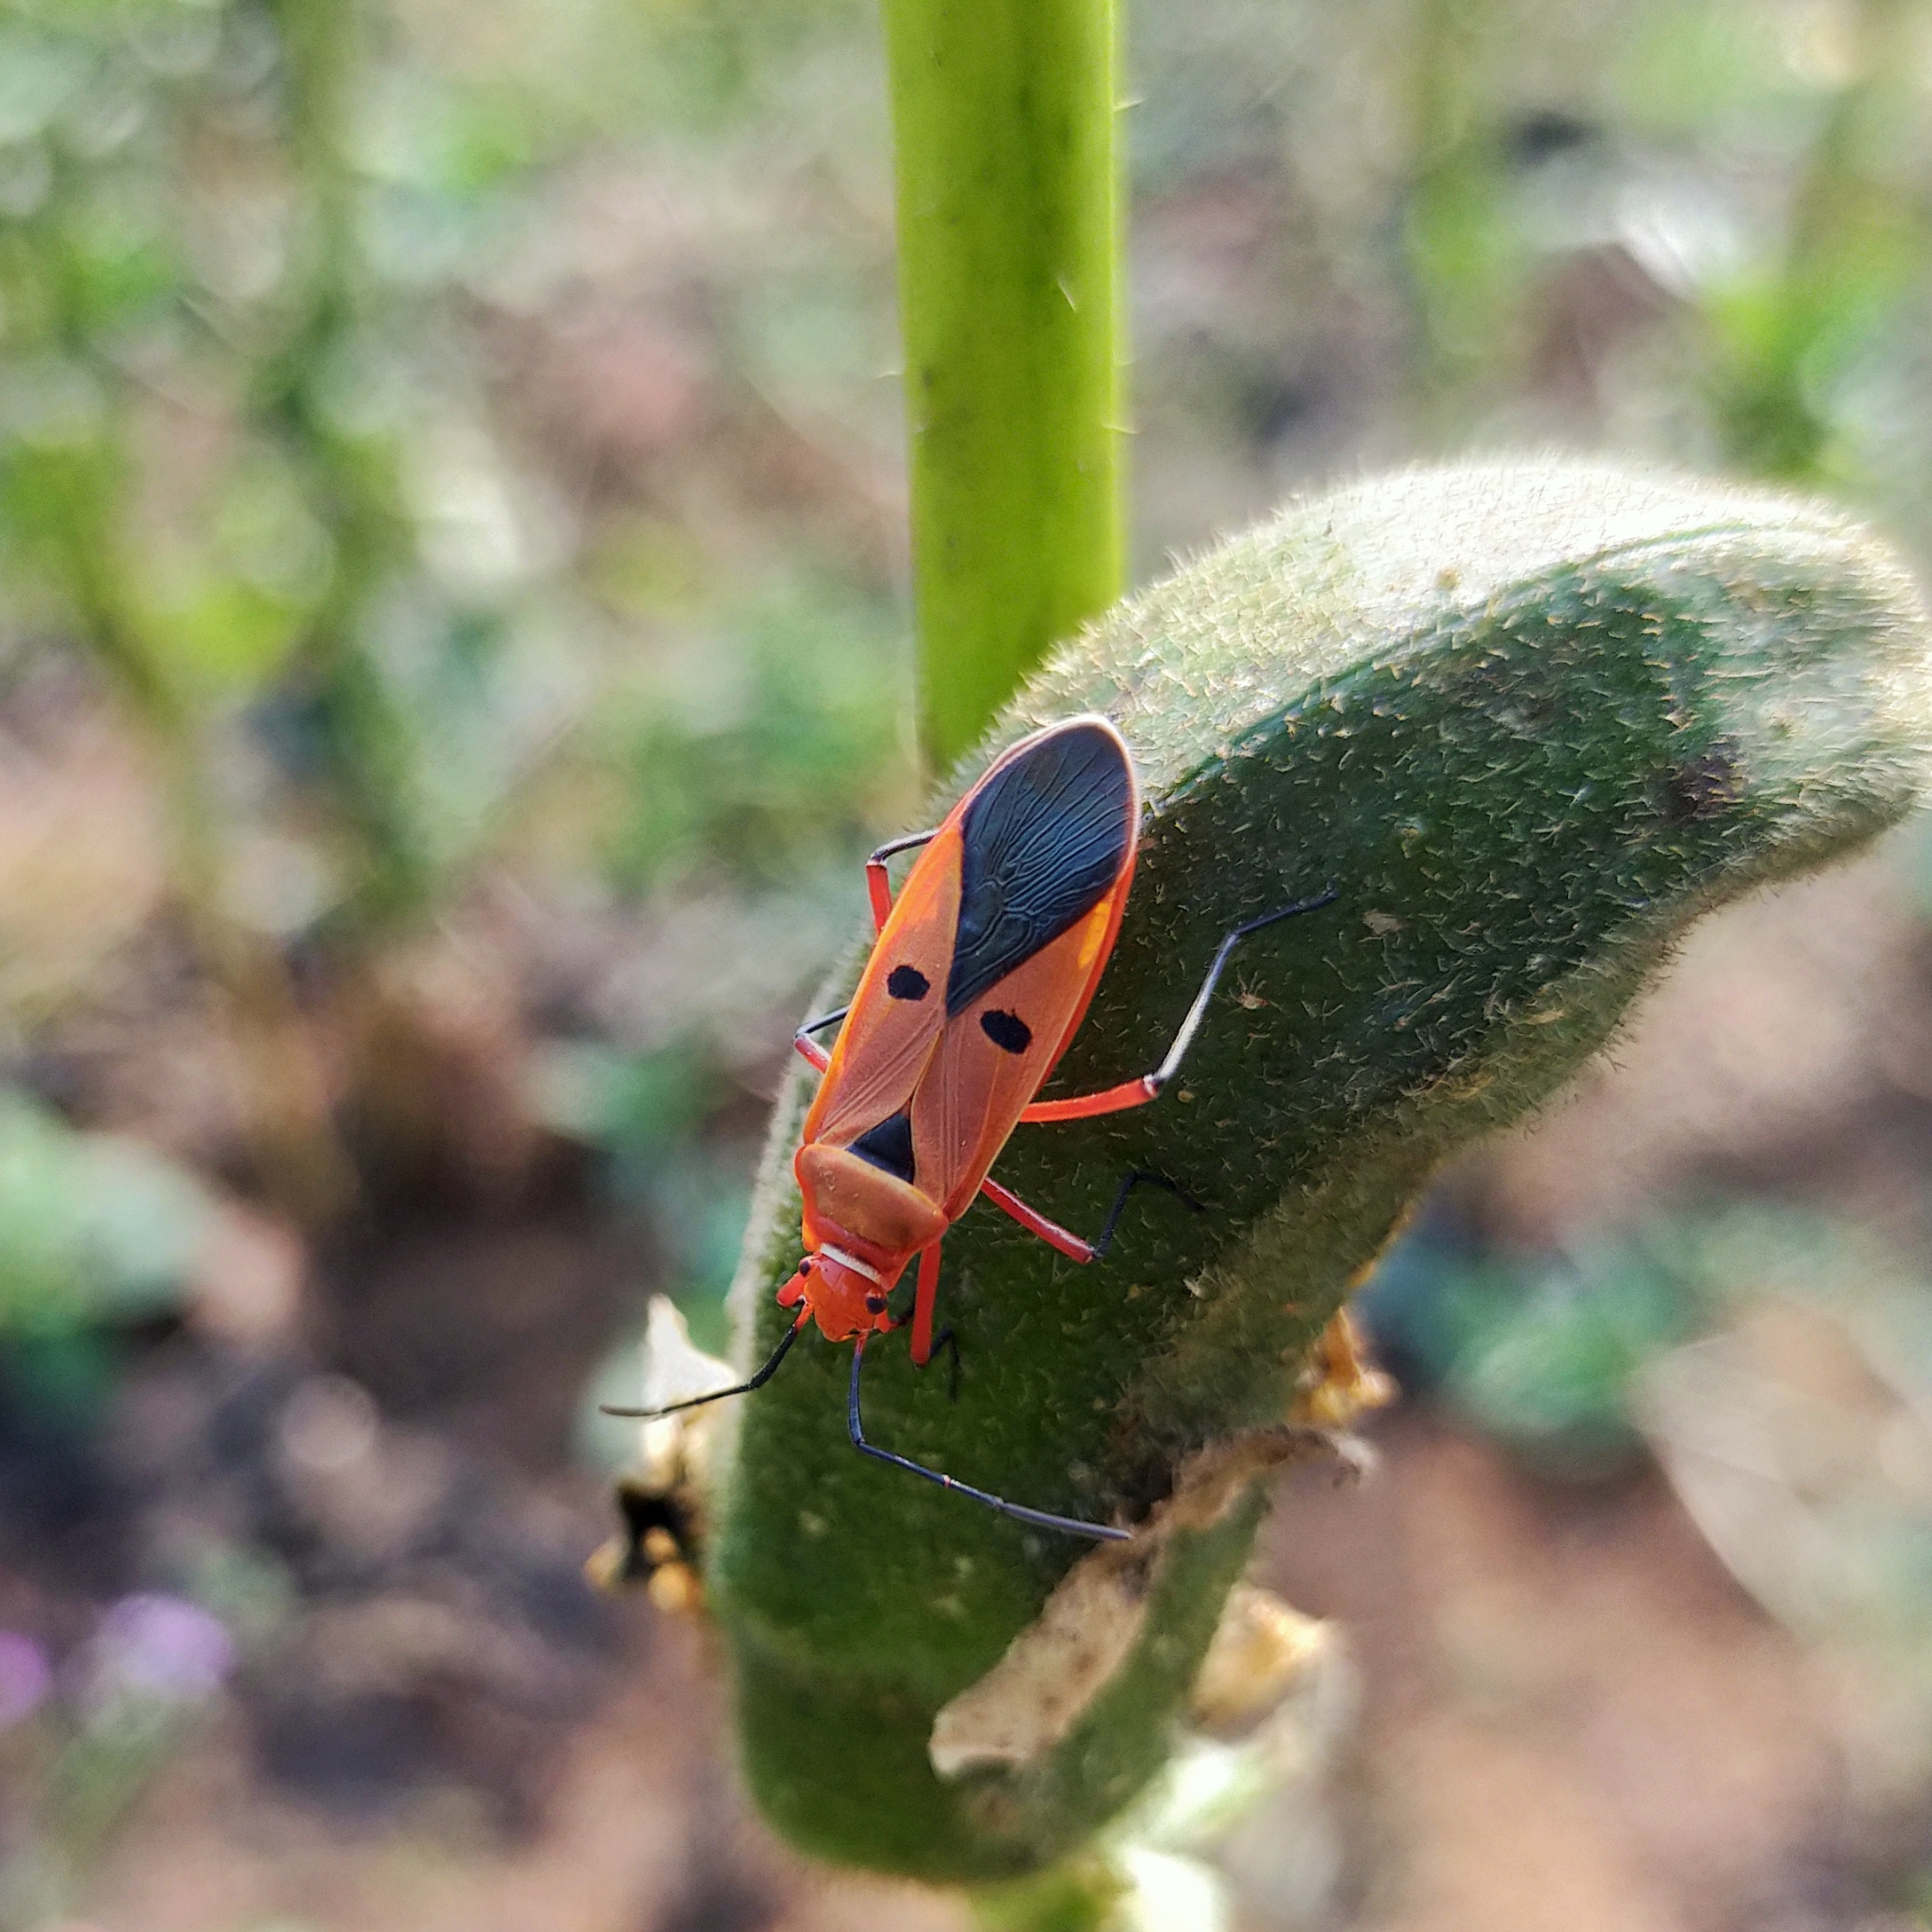 A cotton bug on a ladyfinger